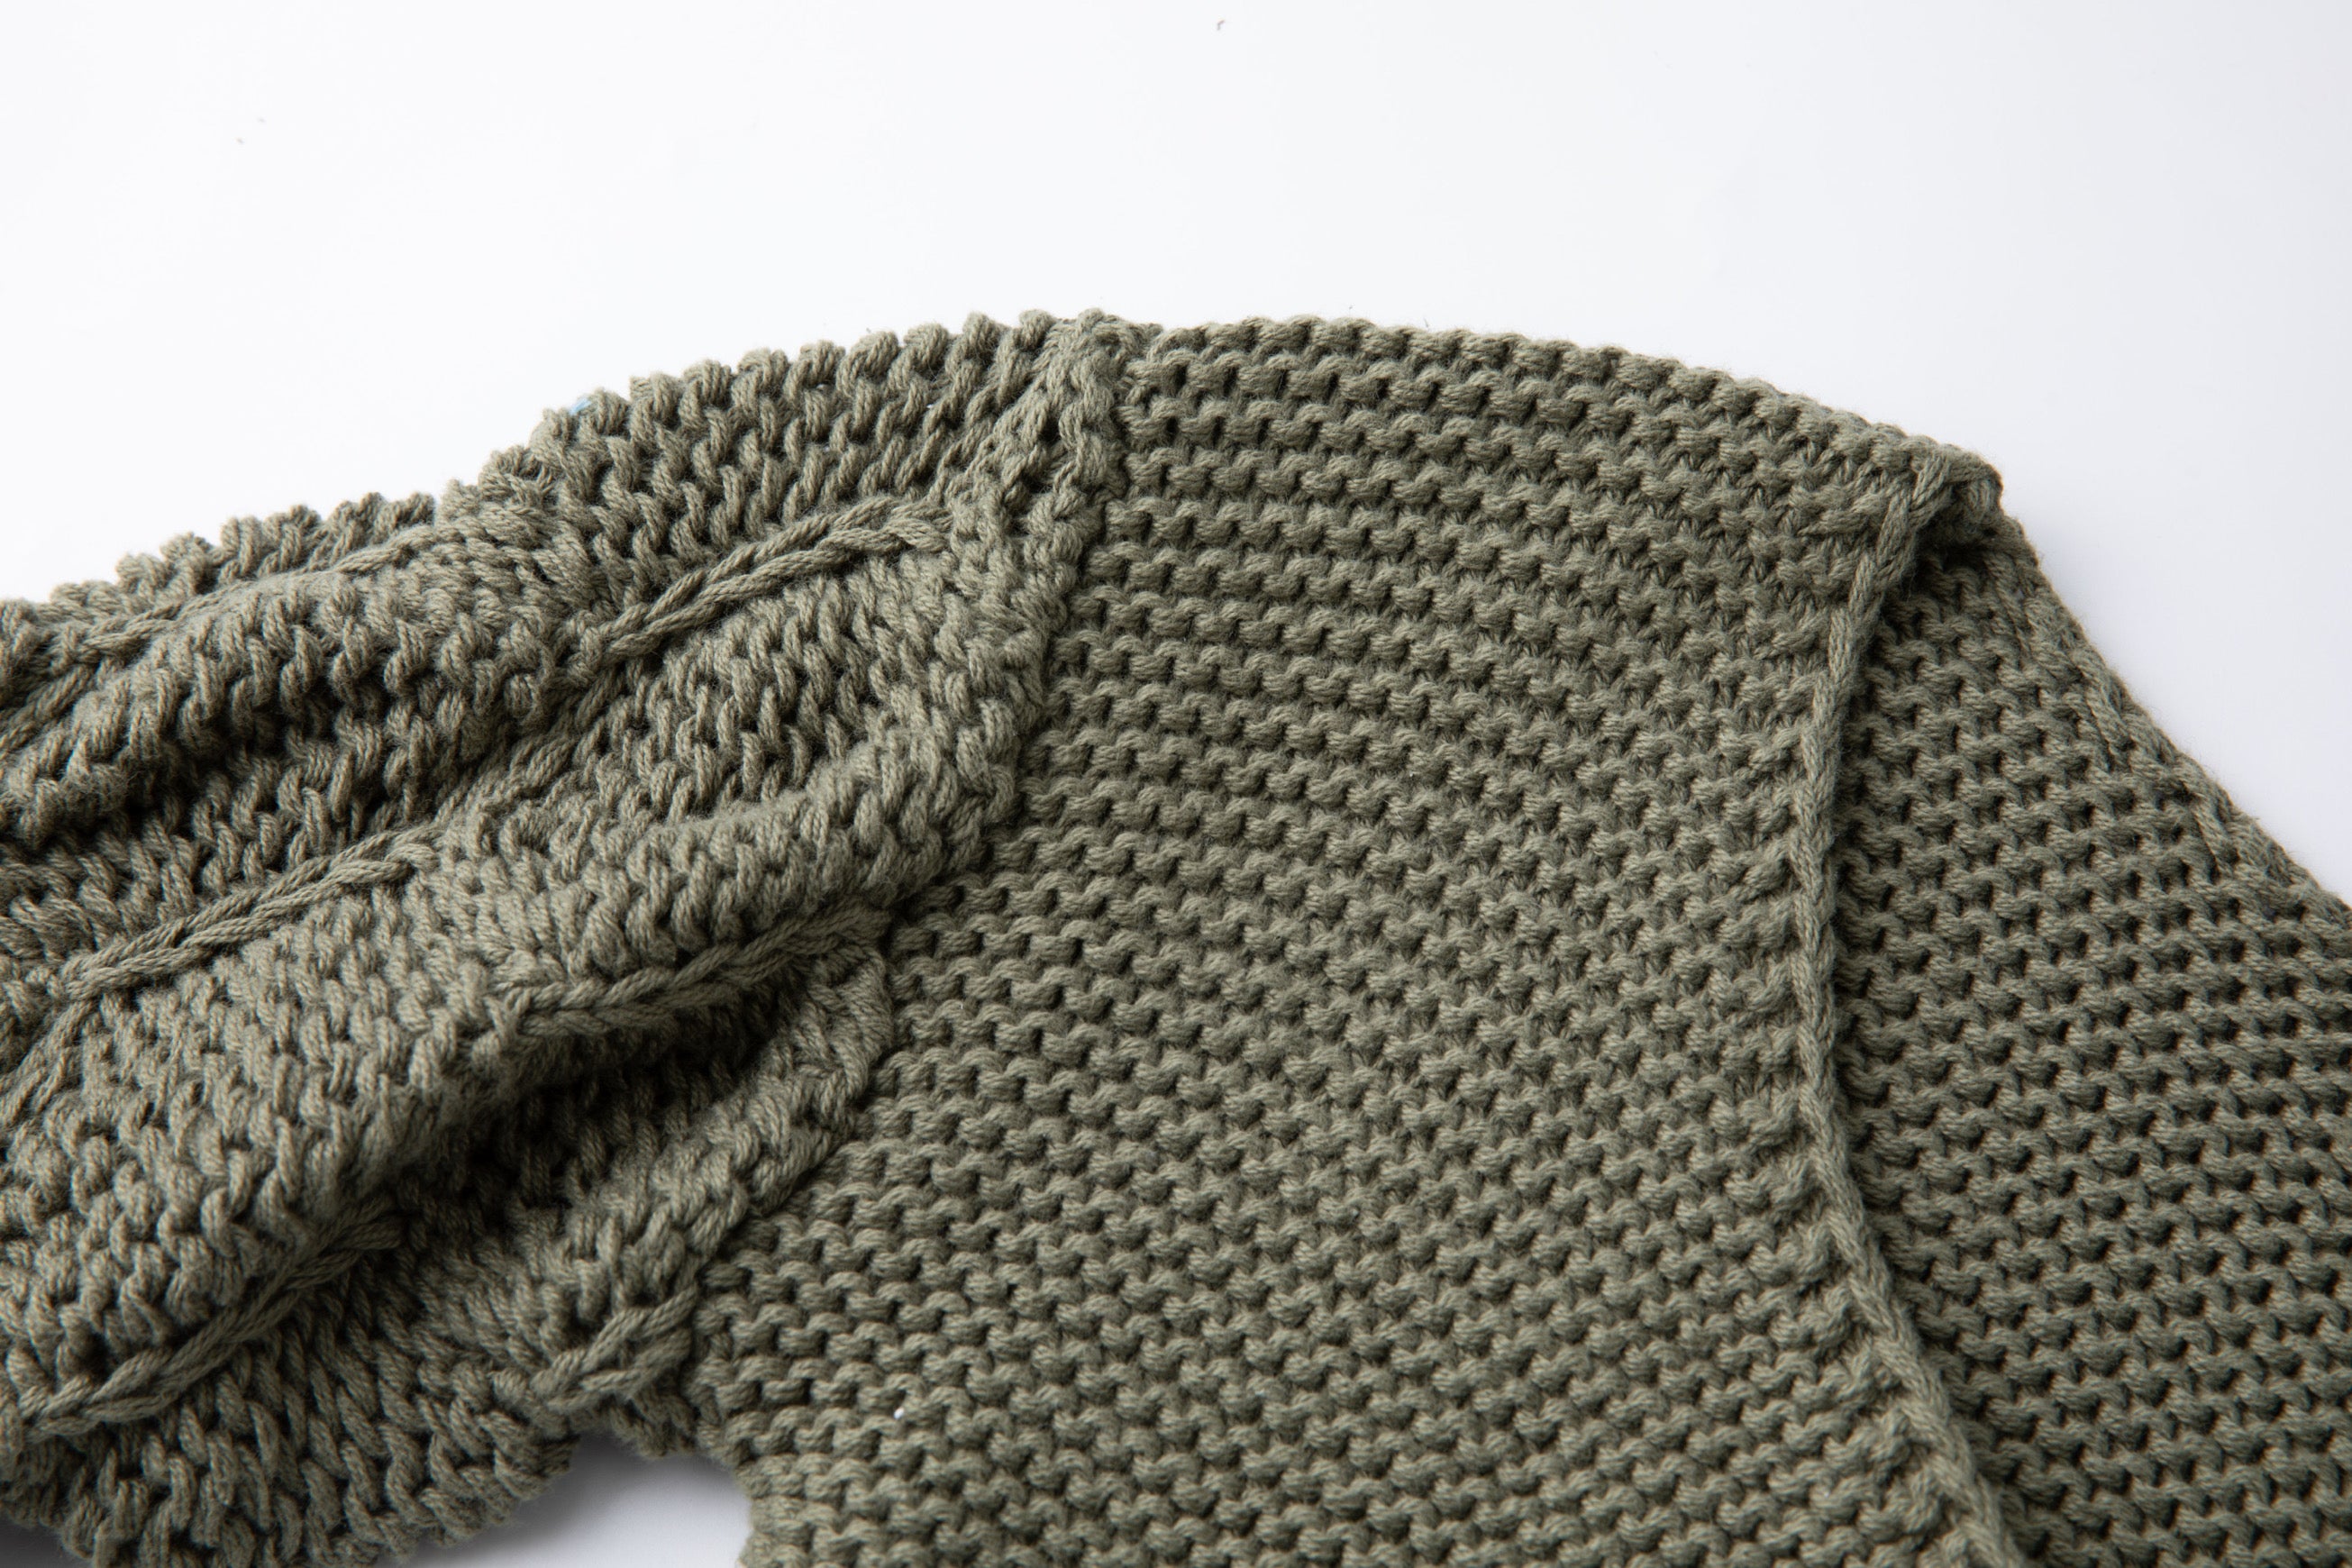 Khaki knitted bolero